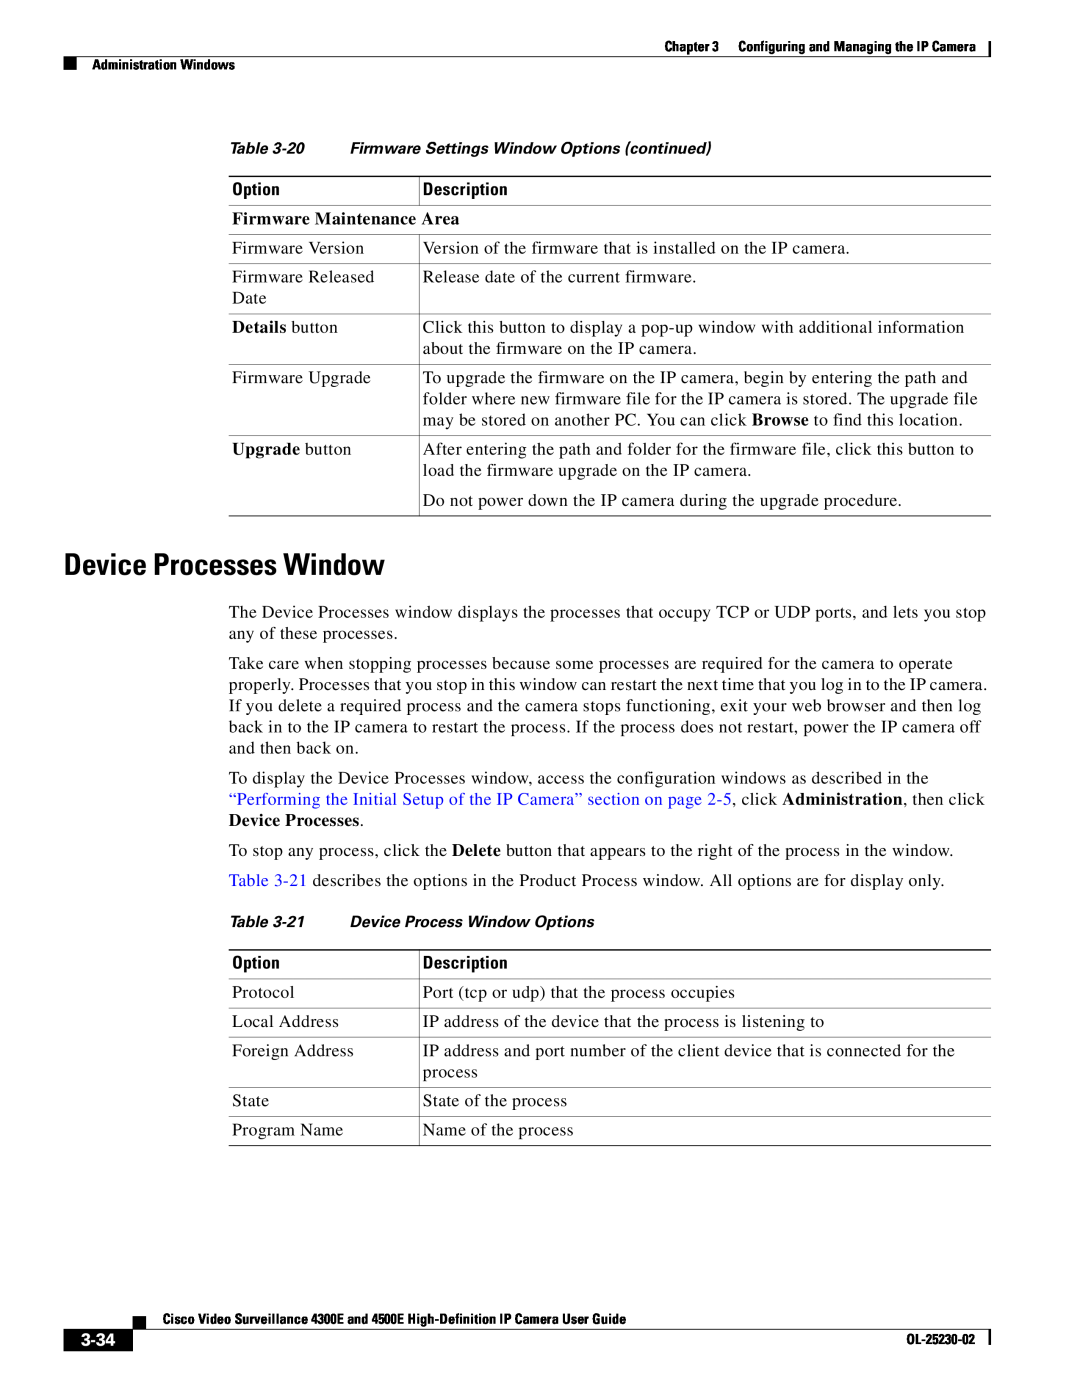 Cisco Systems 4300E, 4500E manual Device Processes Window, Firmware Maintenance Area, Details button, Upgrade button, 3-34 